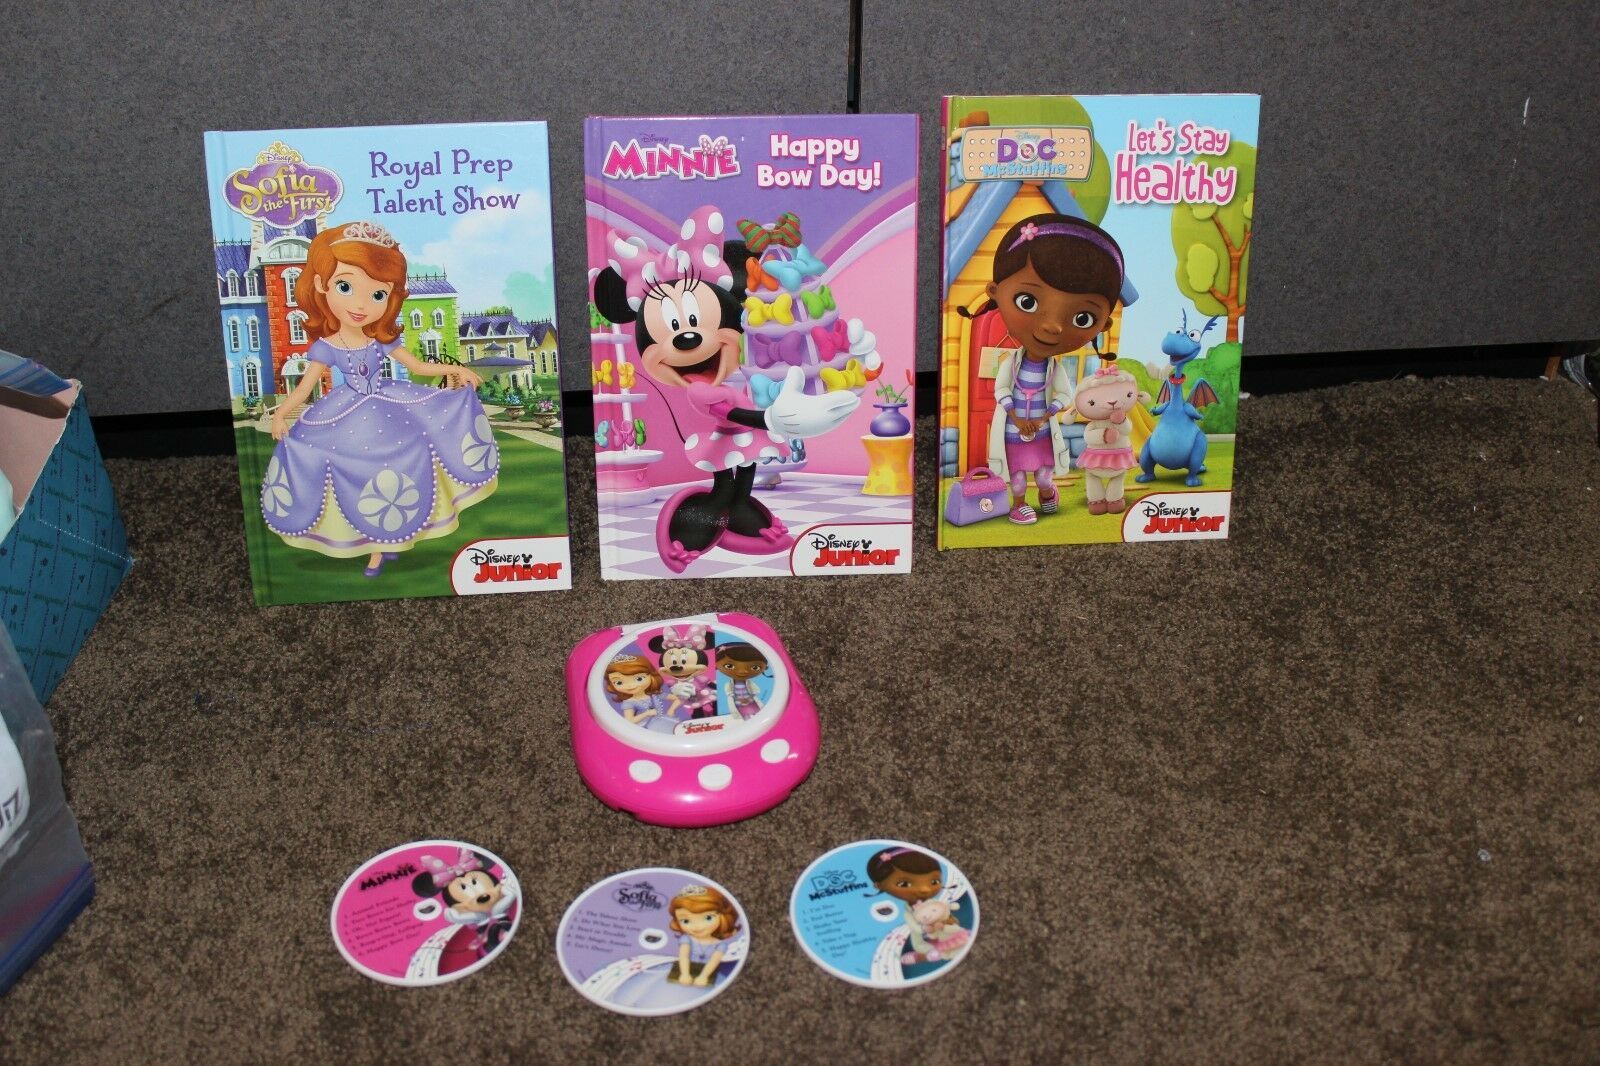 Disney Junior HC Books with Disney Jr. Music Player and CD lot - $15.95